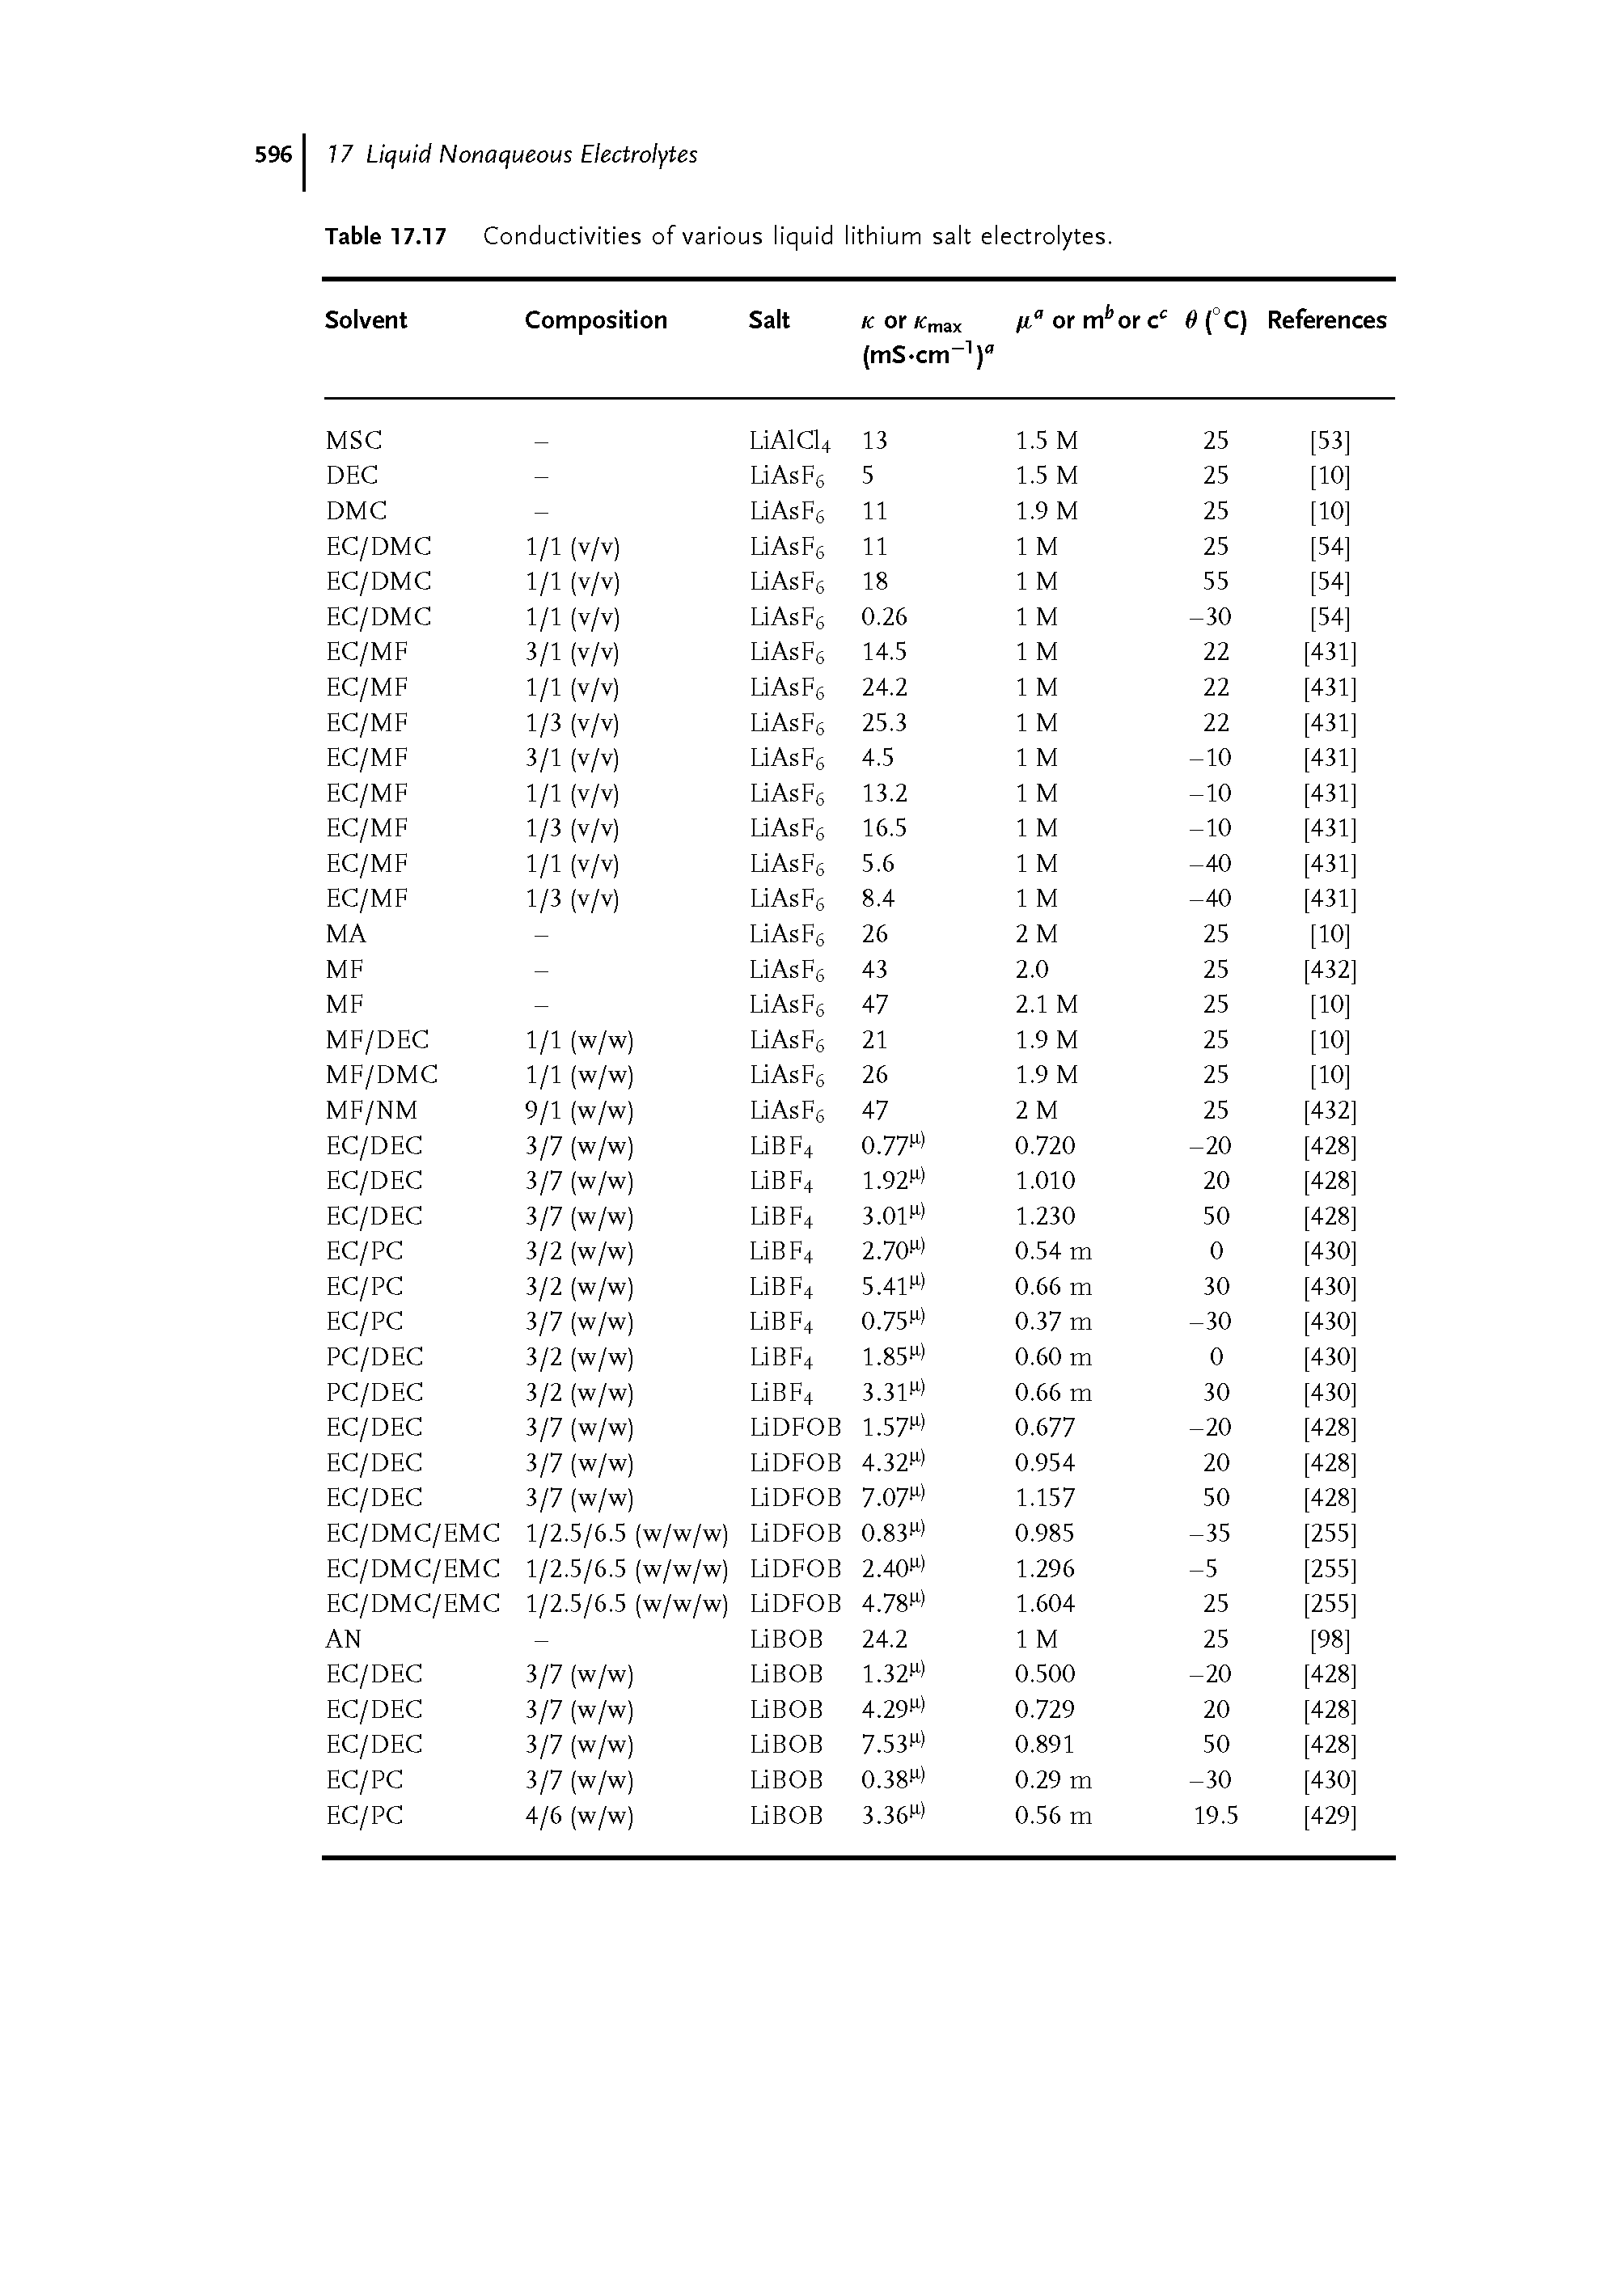 Table 17.17 Conductivities of various liquid lithium salt electrolytes.